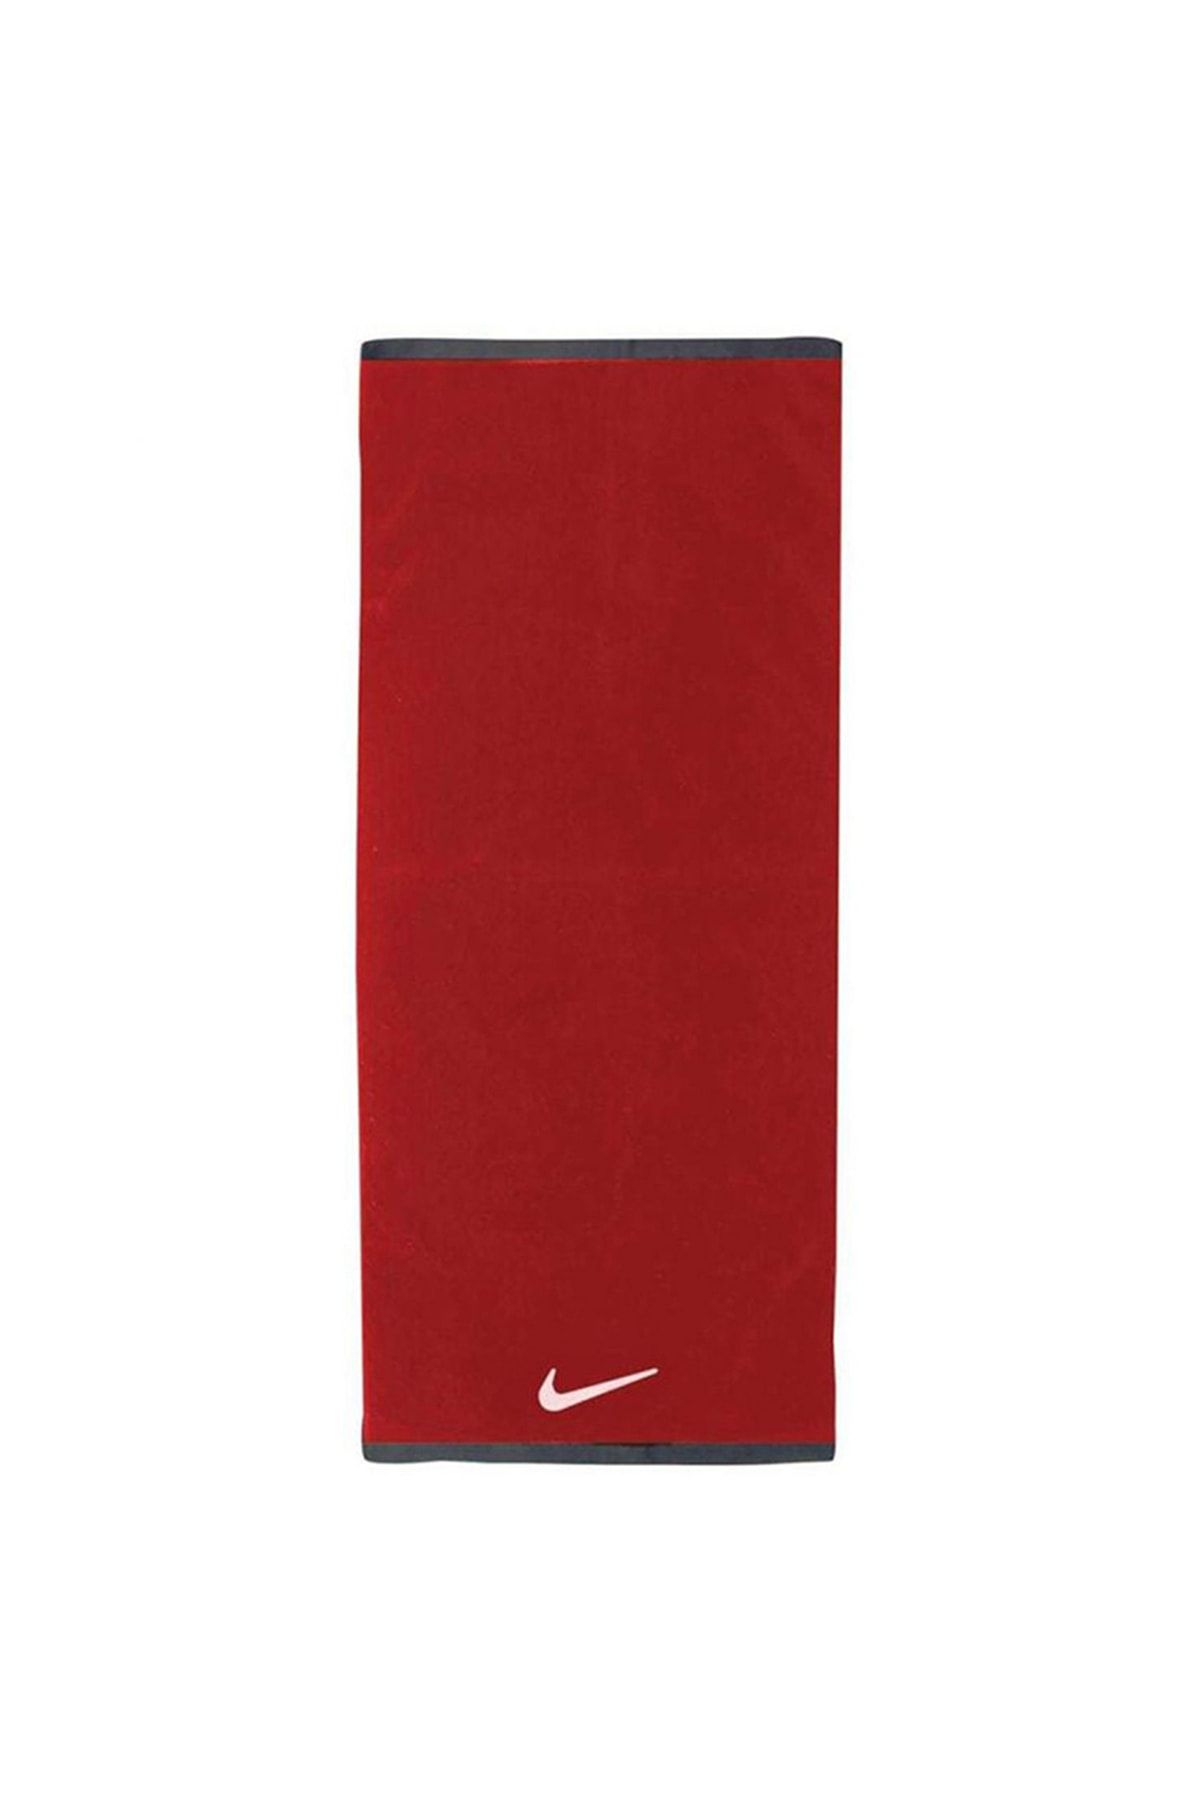 Nike N1001522-643lg Fundamental Havlu Large Kırmızı